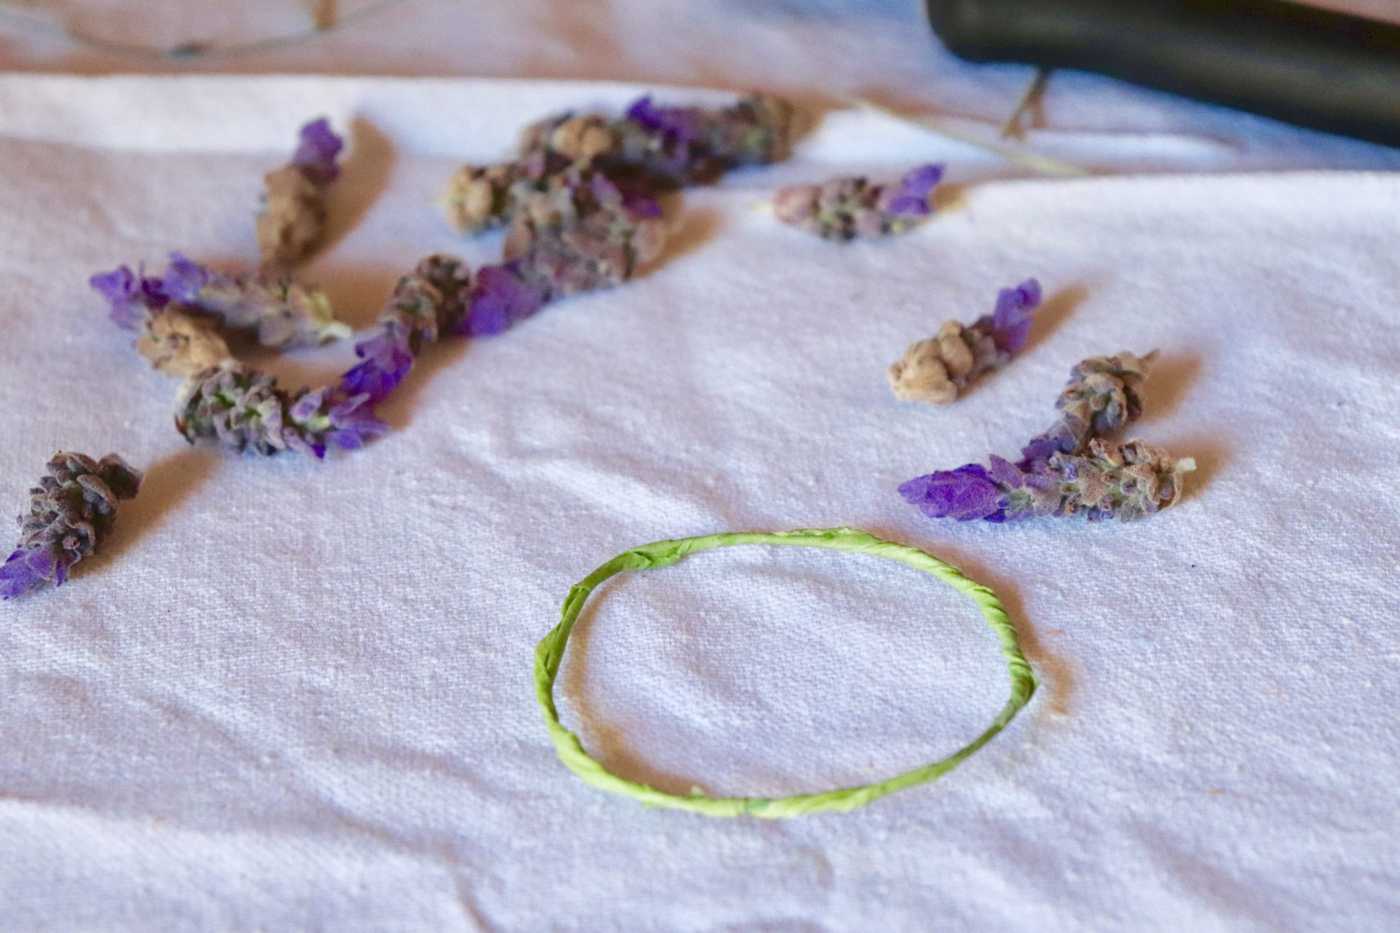 Lavender wreath bind wedding ideas the same way